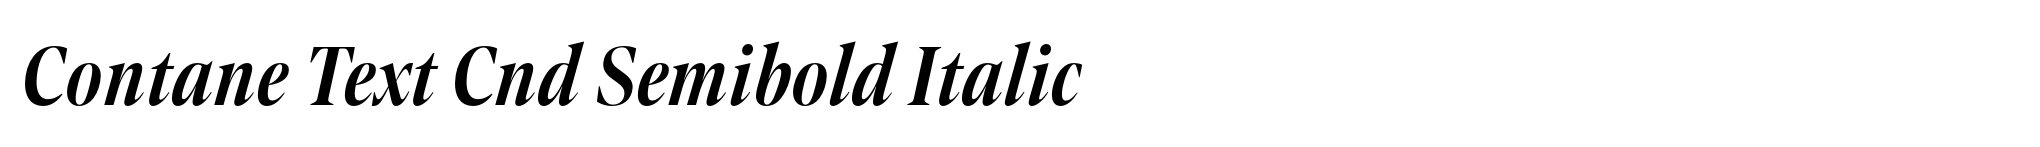 Contane Text Cnd Semibold Italic image